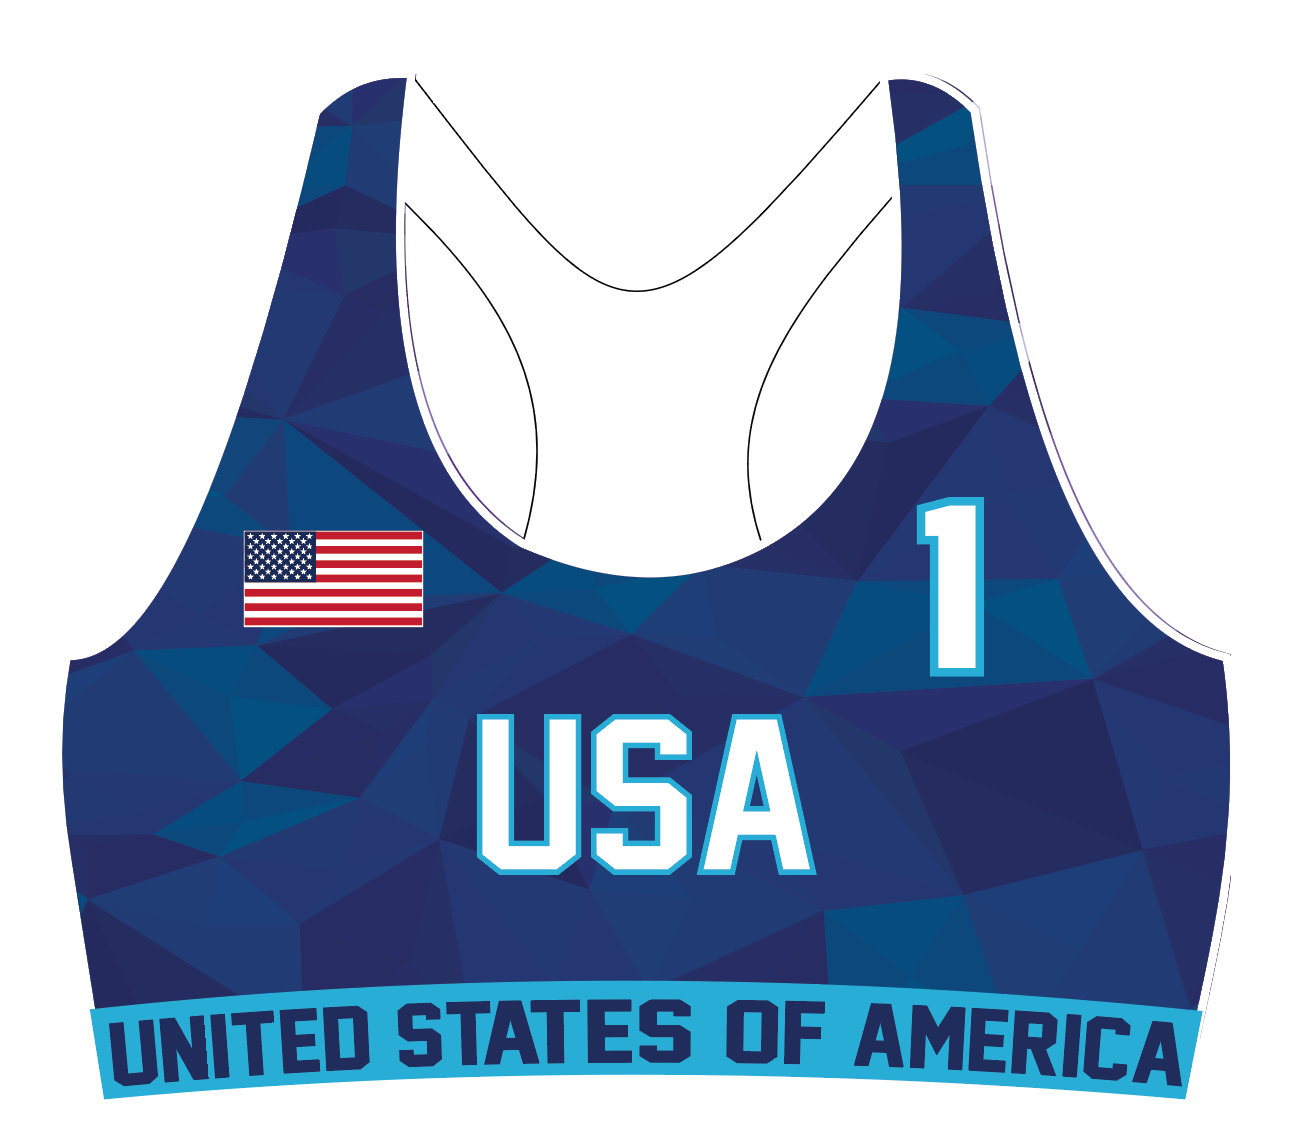 USA Beach Handball OFFICIAL Game Sports Bra Uniform Top